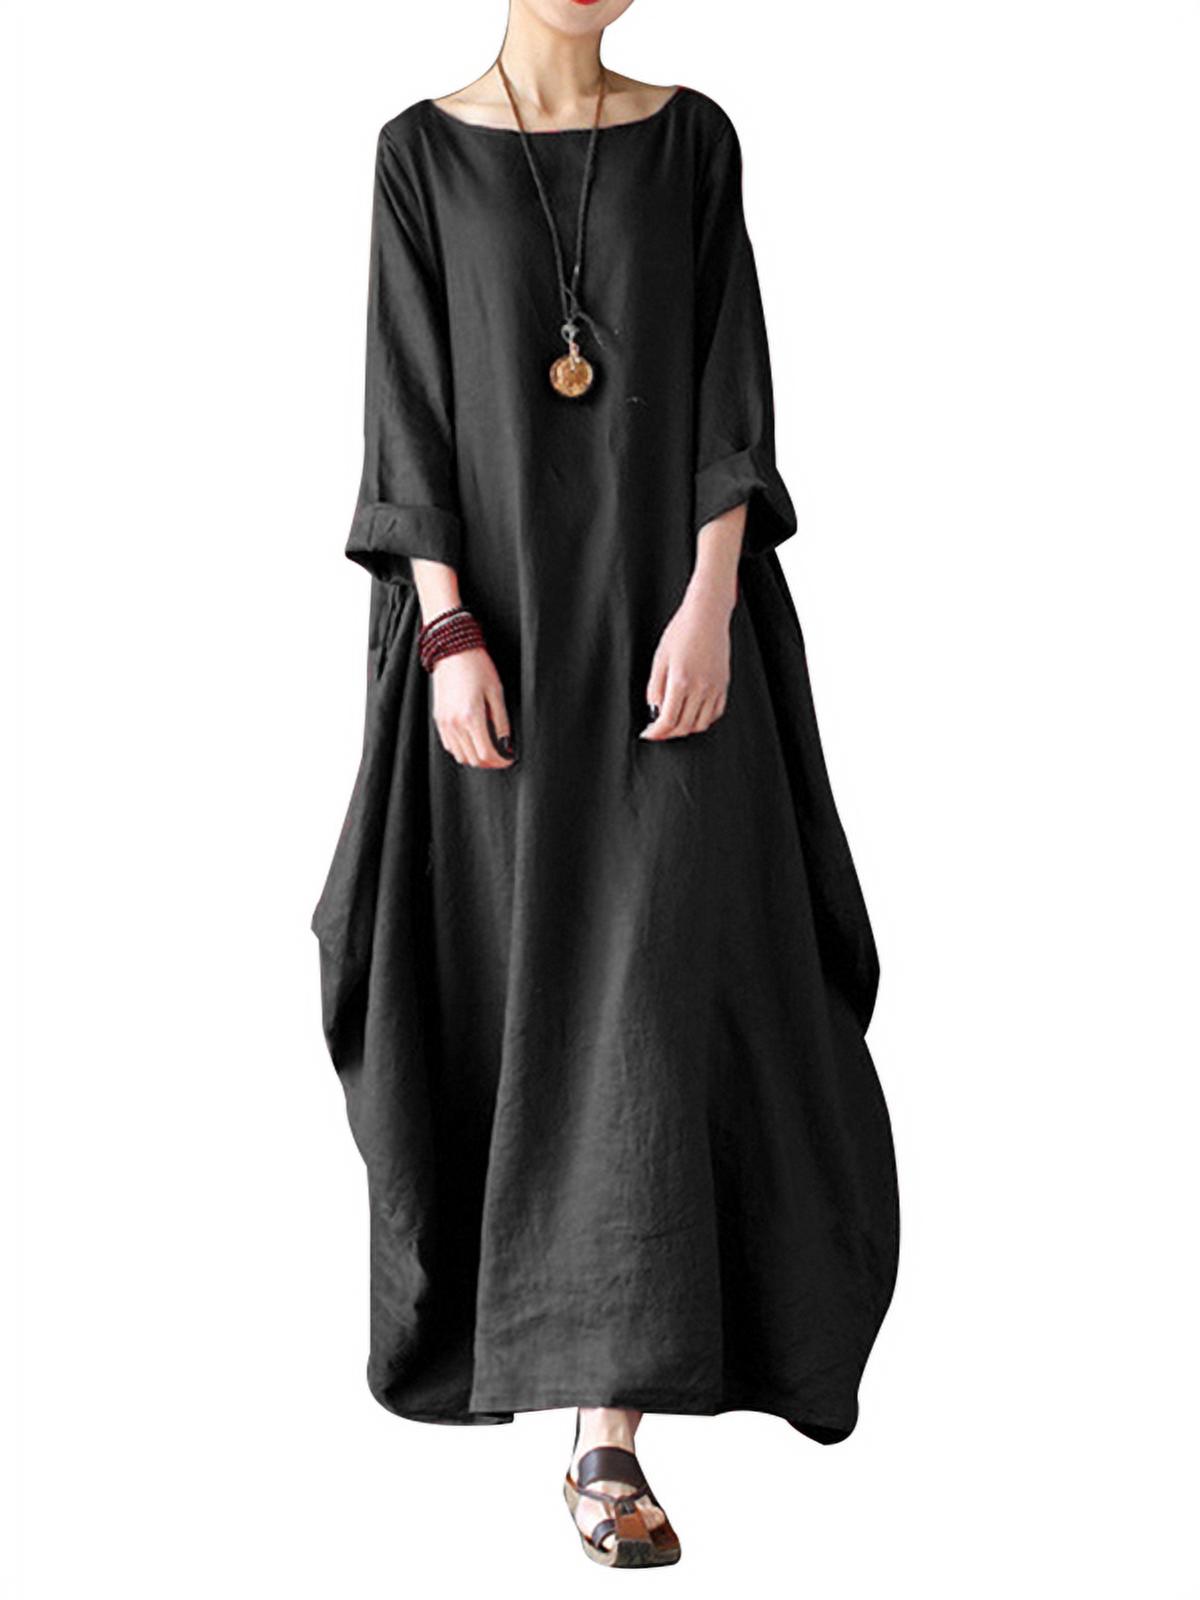 ZANZEA Womens Long Sleeve Casual Long Shirt Dresses - image 1 of 4